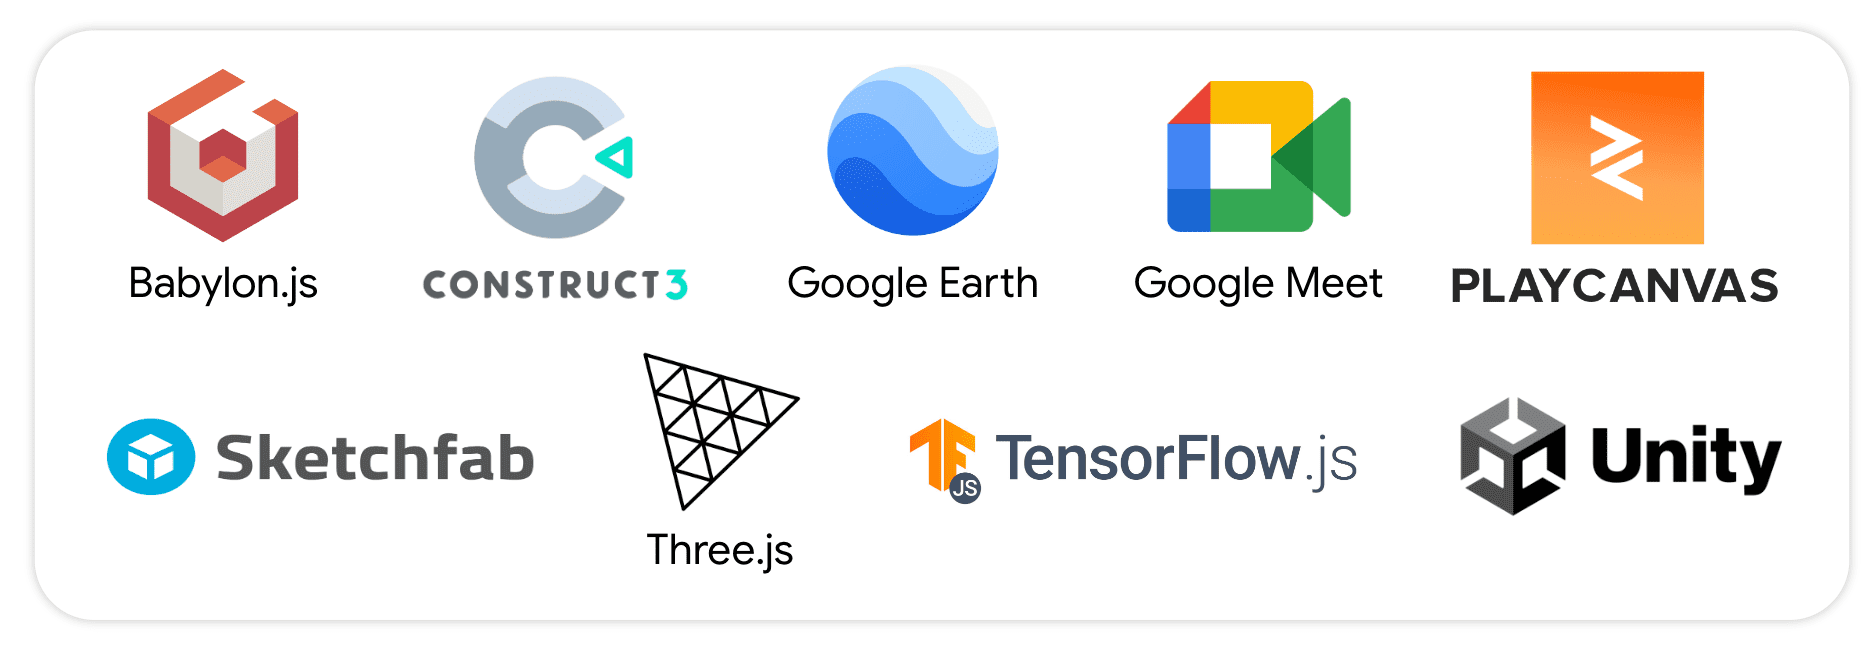 Babylon.js, Construct 3, Google Earth, Google Meet, PlayCanvas, Sketchfab, Three.JS, TensorFlow.js, এবং ইউনিটি।